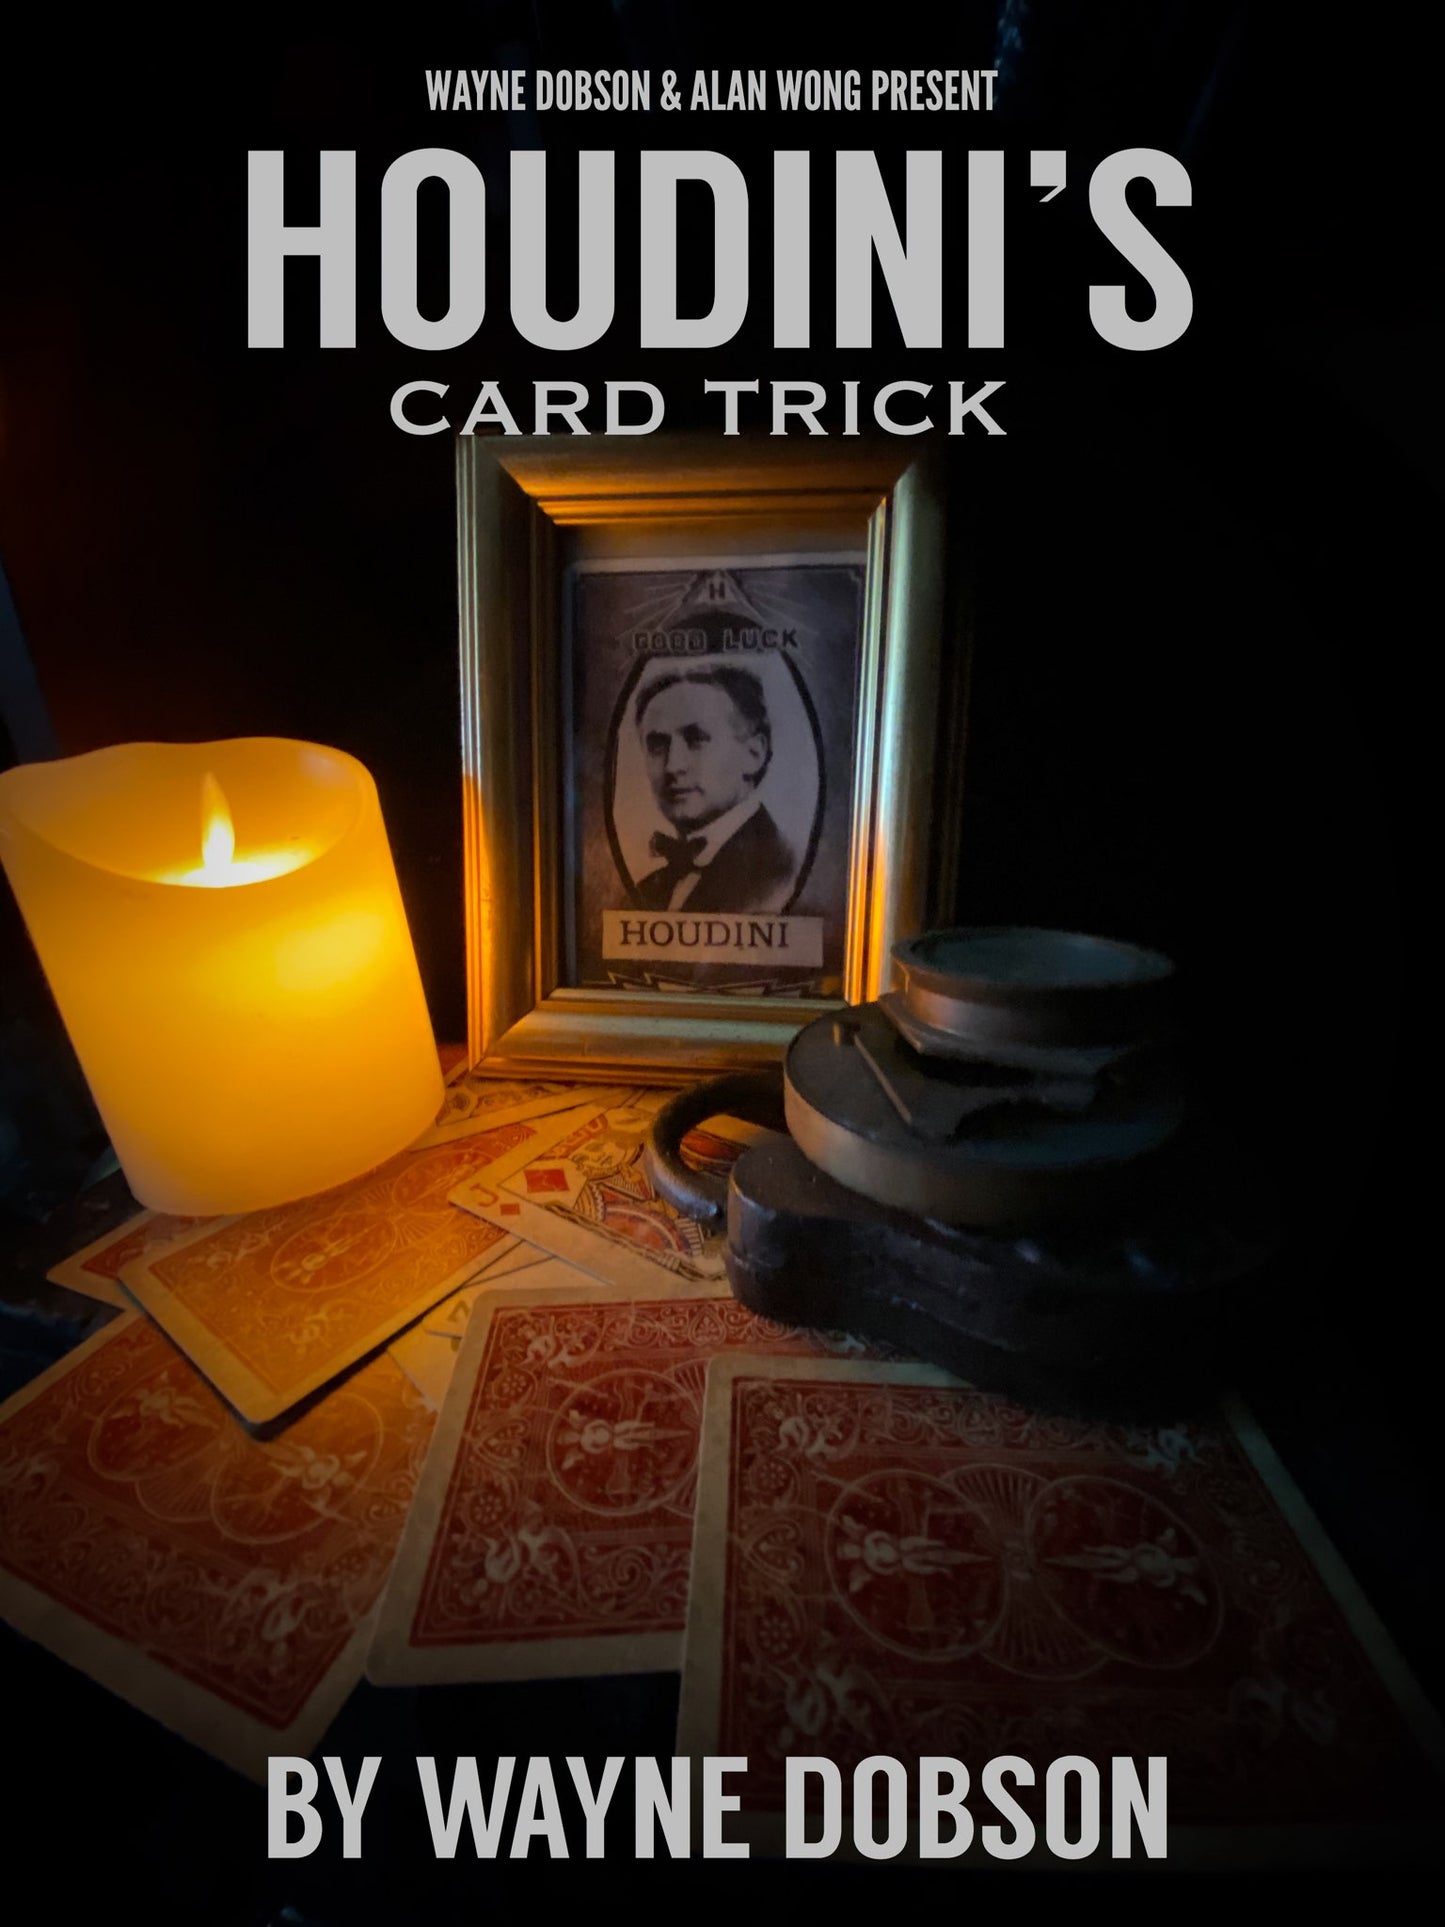 Houdini’s Card Trick by Wayne Dobson